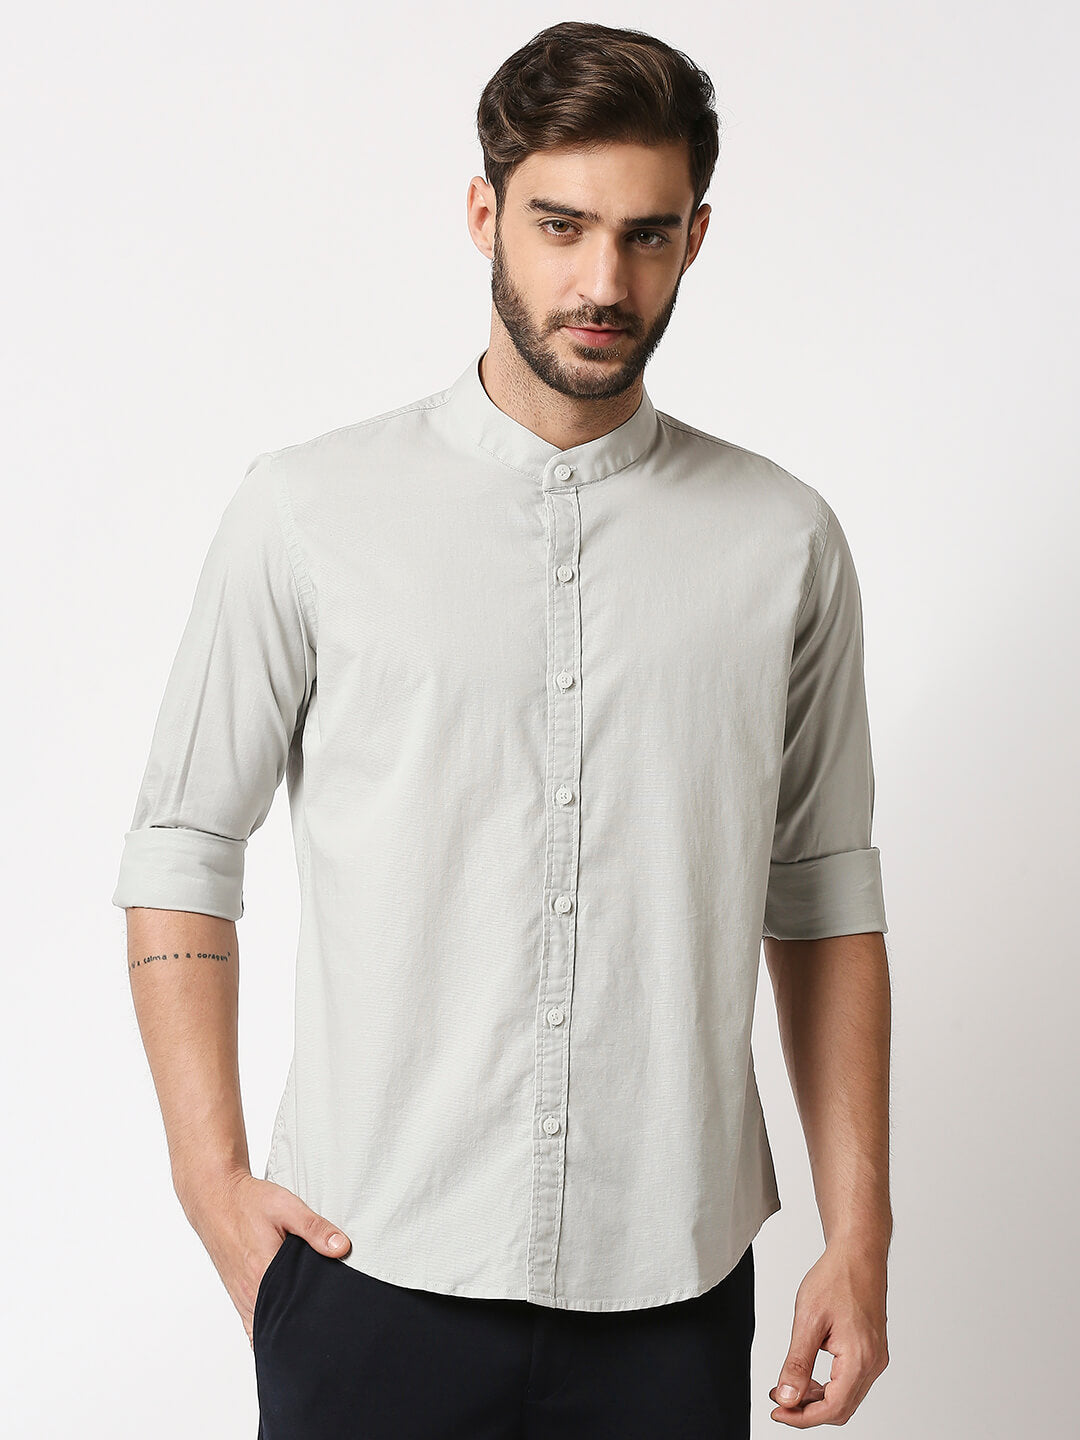 The Manaca Mandarin Collar Plain Shirt - Grey